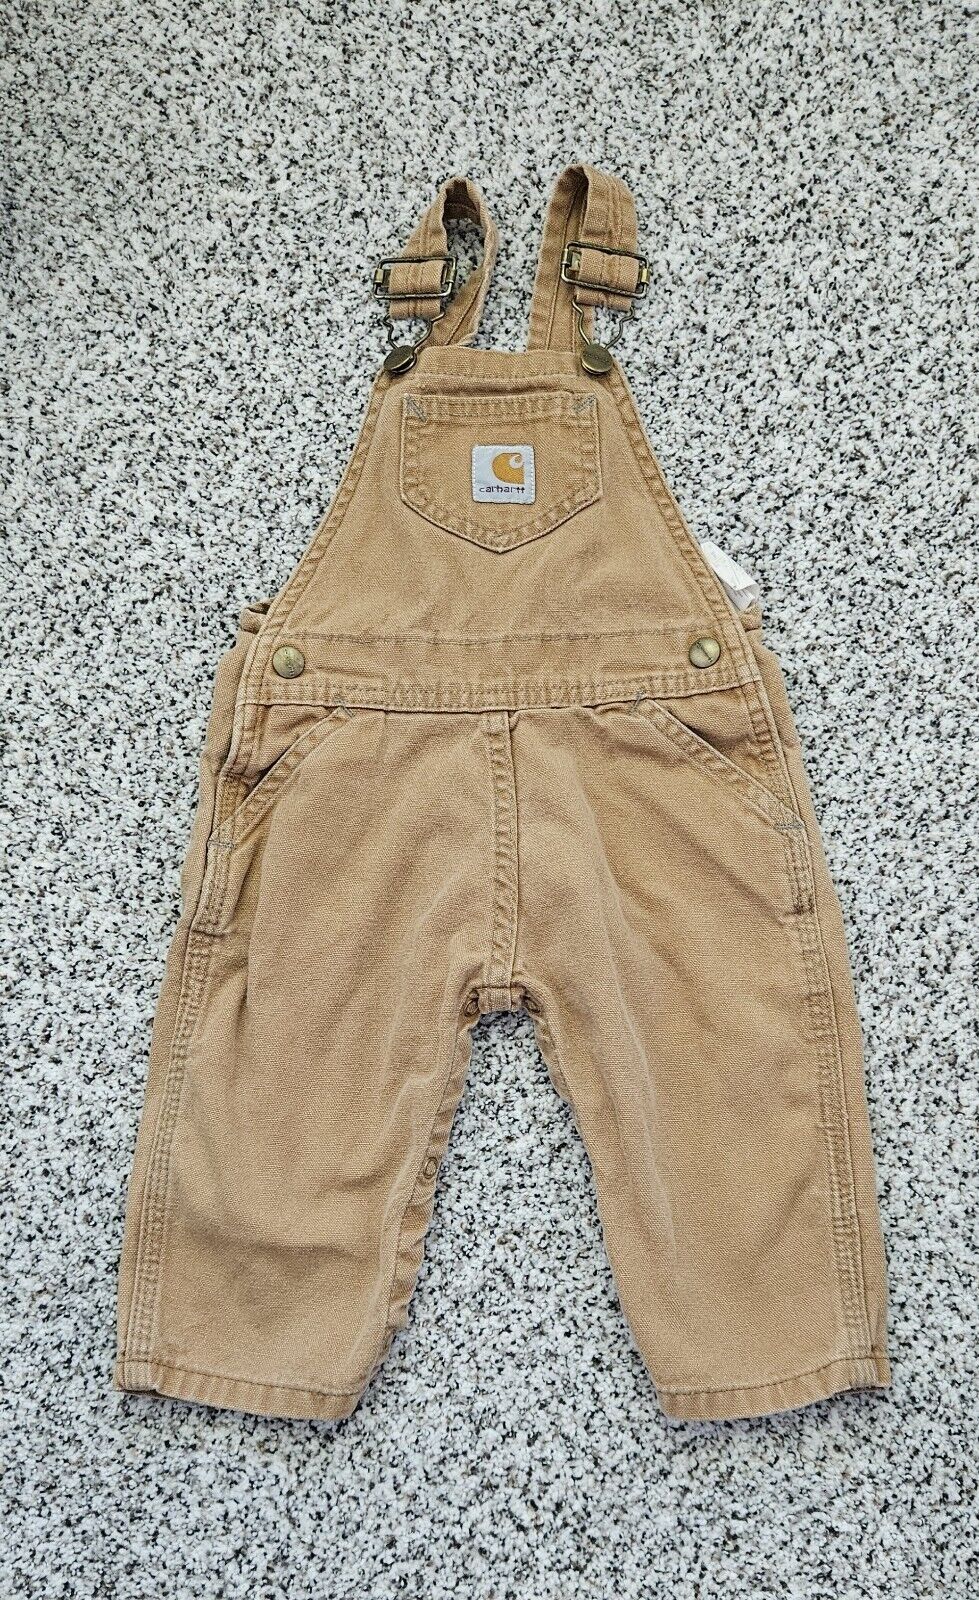 Vintage Carhartt Bib Overalls Boys Girls Size 18 Months Duck Brown  Outdoor USA